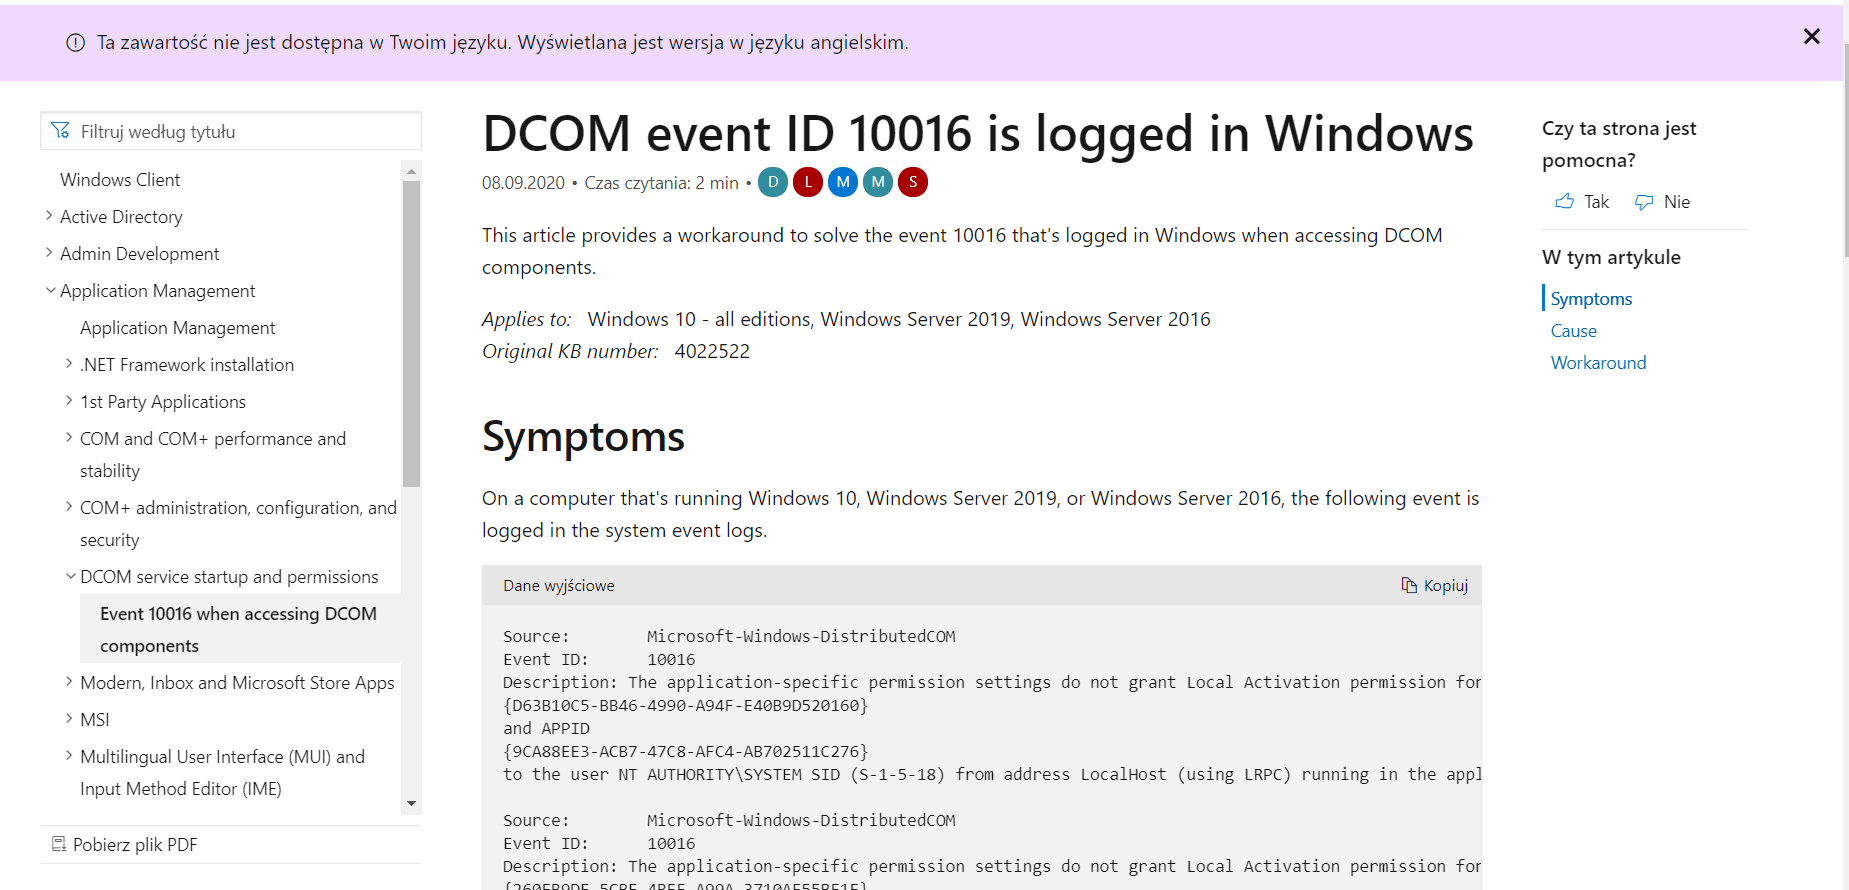 Microsoft-Windows-DistributedCOM event ID 10016 - Microsoft Community